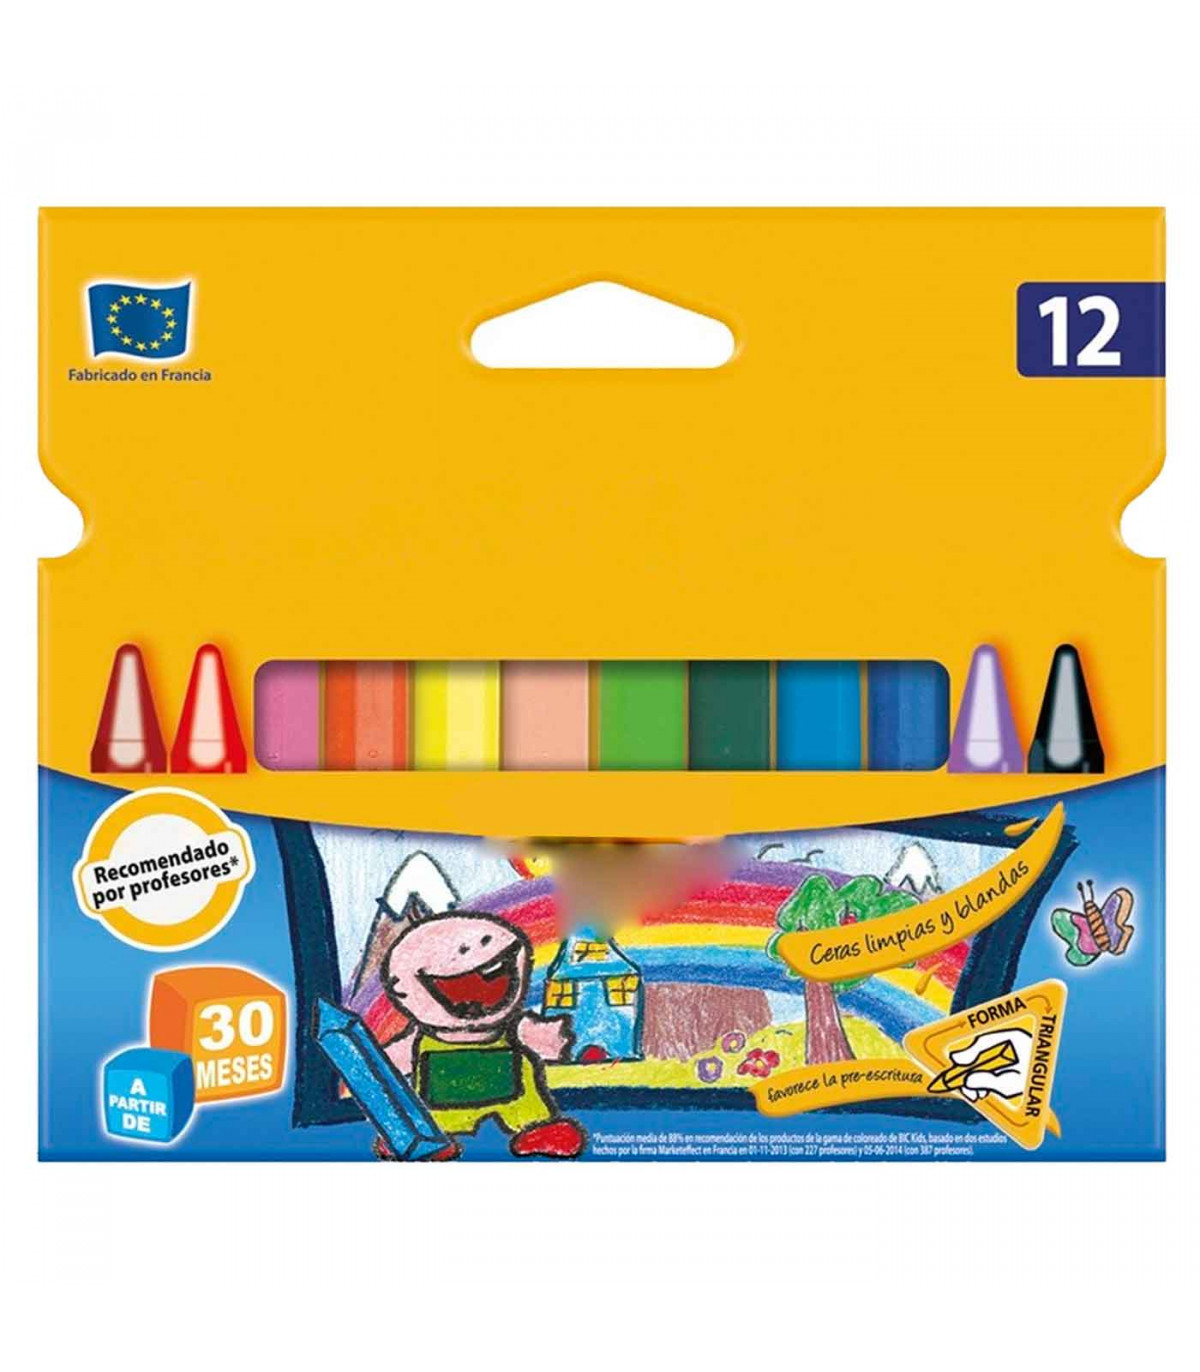 Lapices cera Plastidecor caja de 12 unidades Multicolor